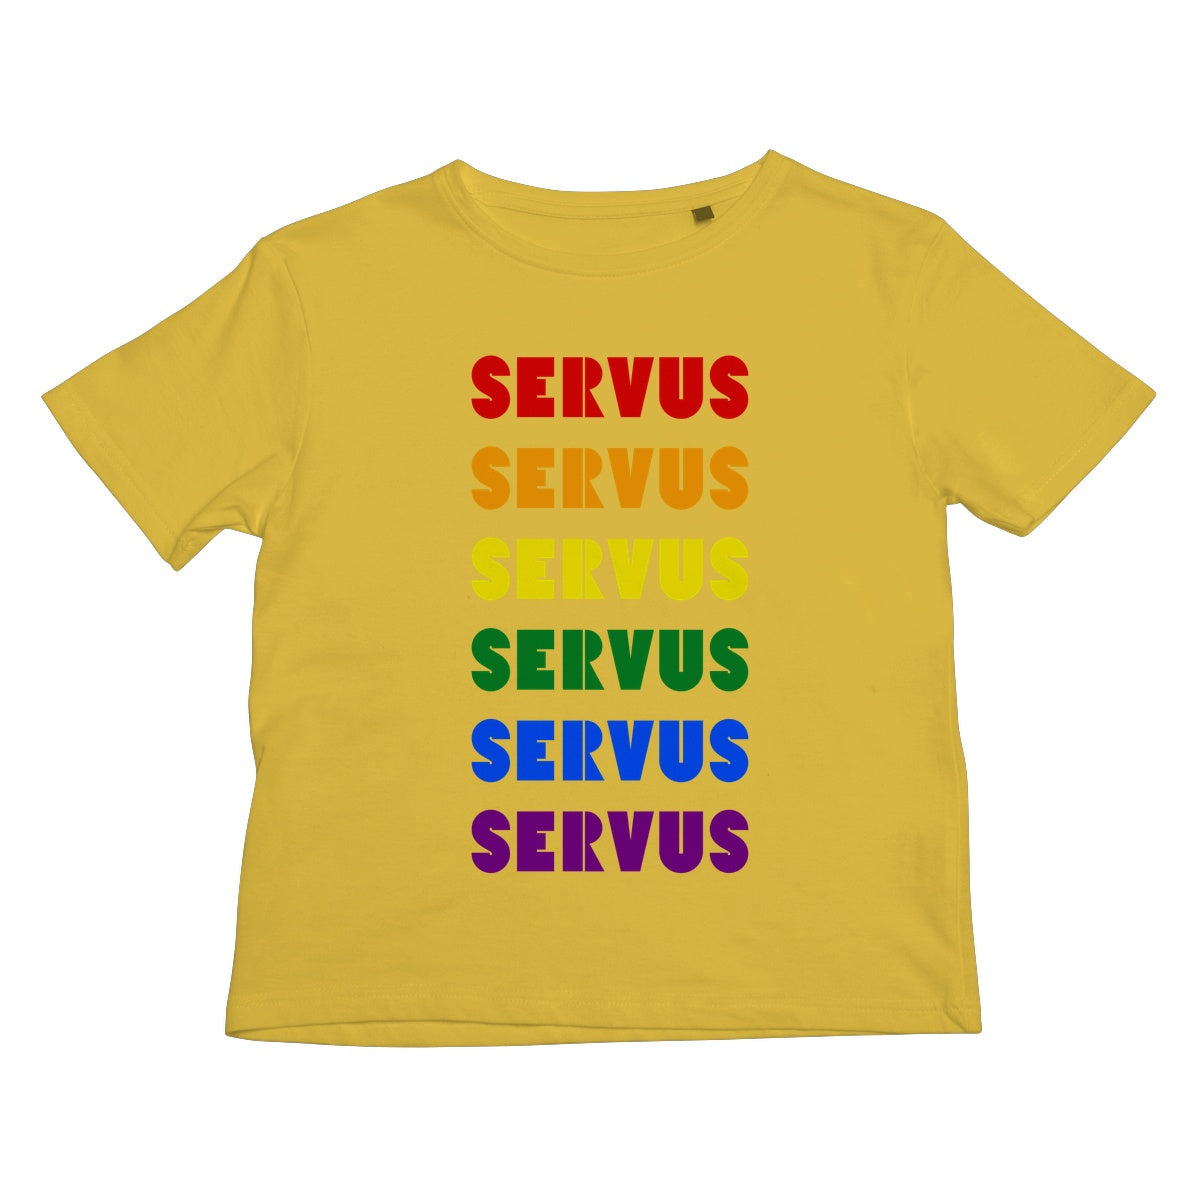 Kid's Bavarian Graphic T-Shirt "Servus" Rainbow print - 8 colours - Bavari Shop - Bavarian Outfits, Dirndl, Lederhosen & Accessories